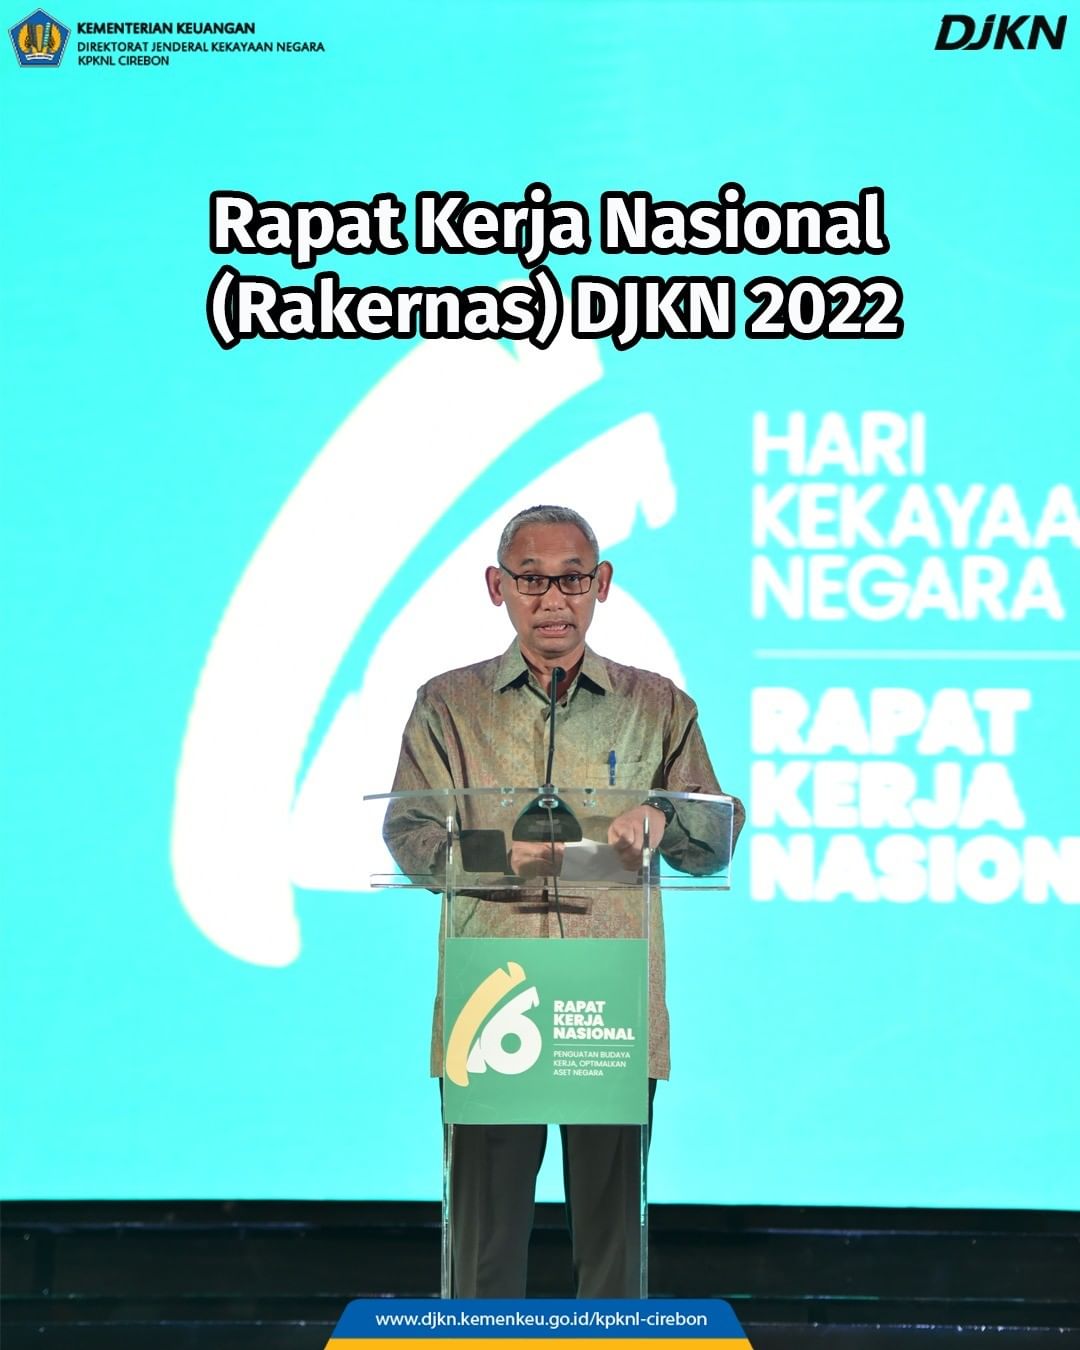 Rakernas DJKN 2022 “Kuatkan Budaya Organisasi, Optimalkan Aset Negara”.